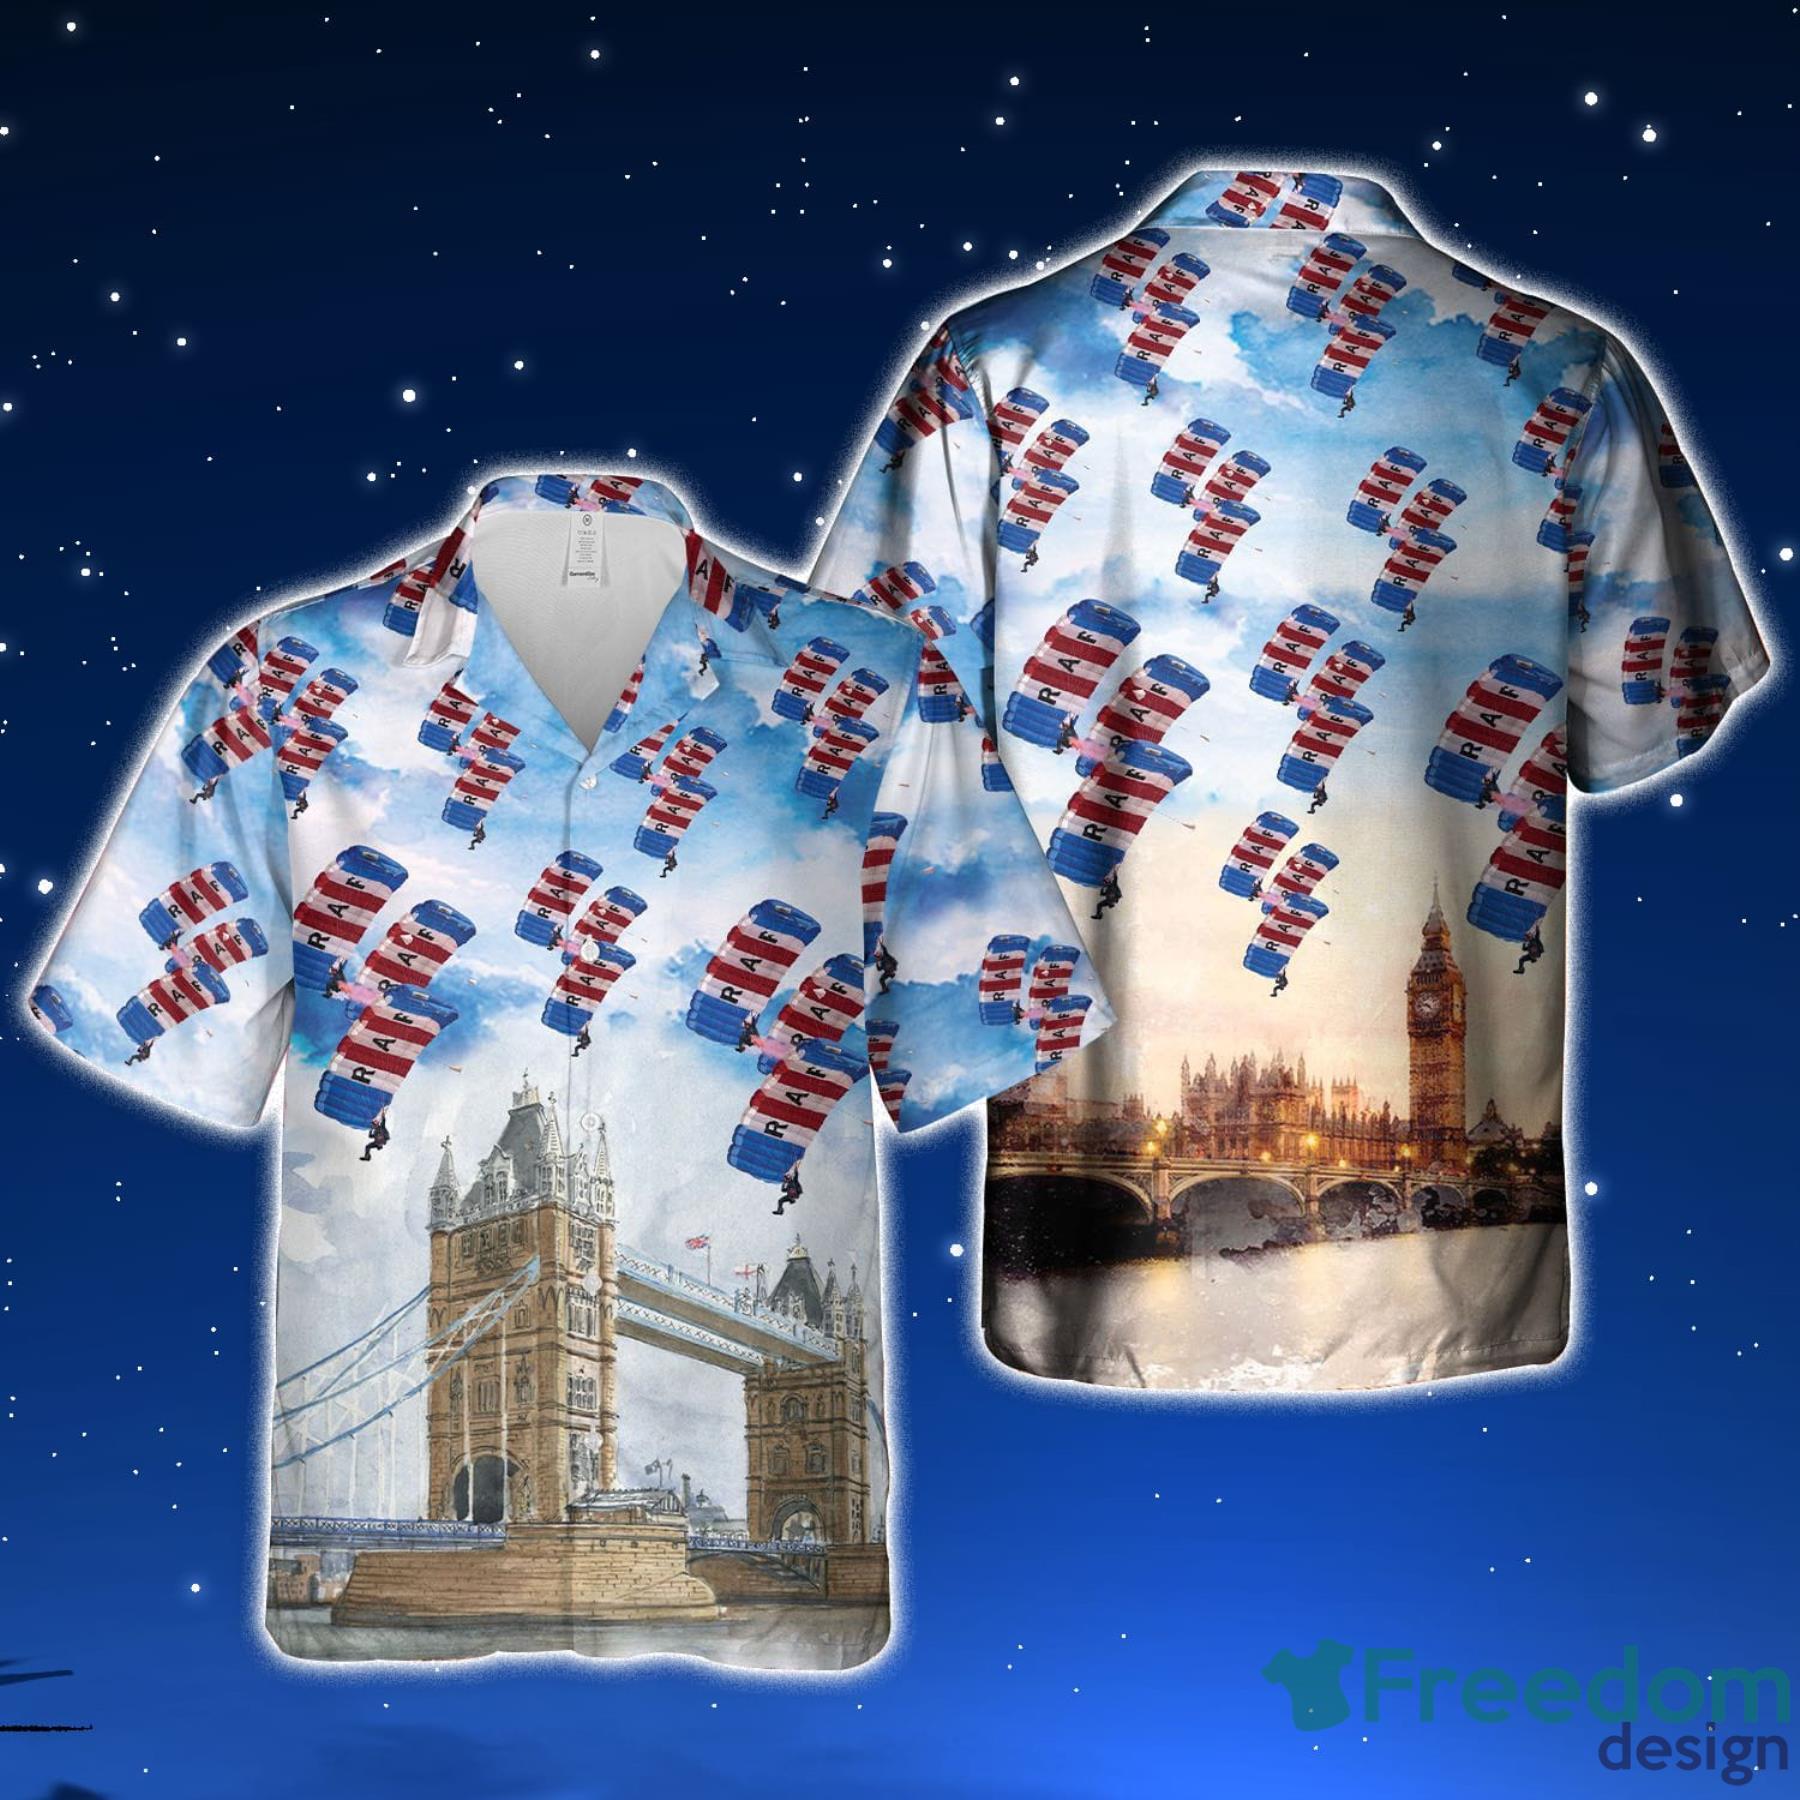 Pittsburgh Pirates Hawaiian Shirt For Men And Women Summer Gift -  Freedomdesign